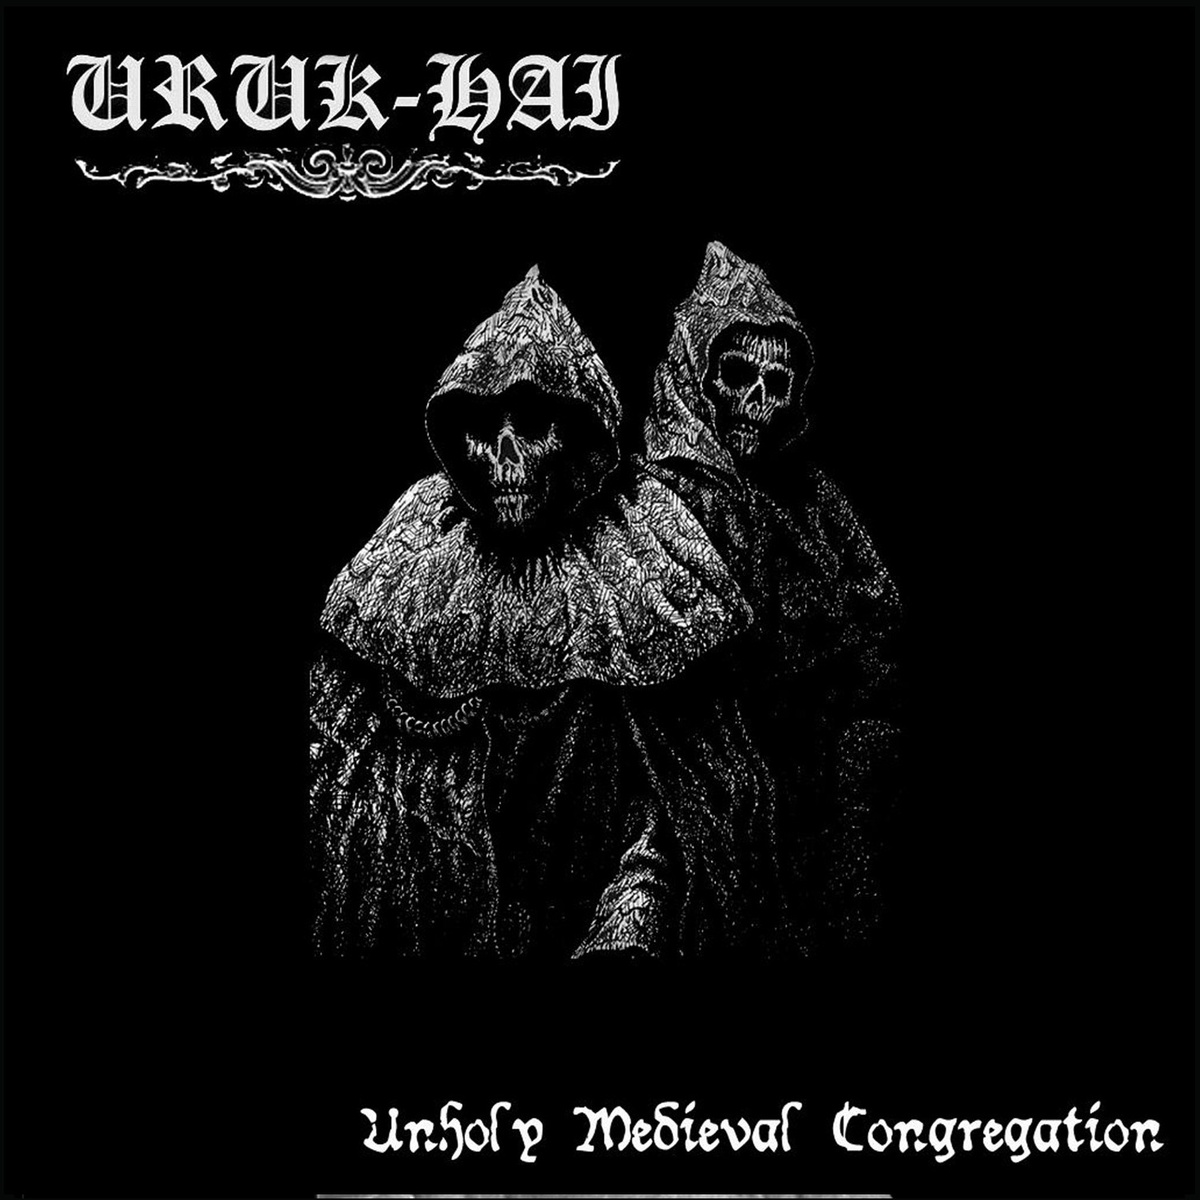 URUK HAI(spa) – Unholy Medieval Congregation